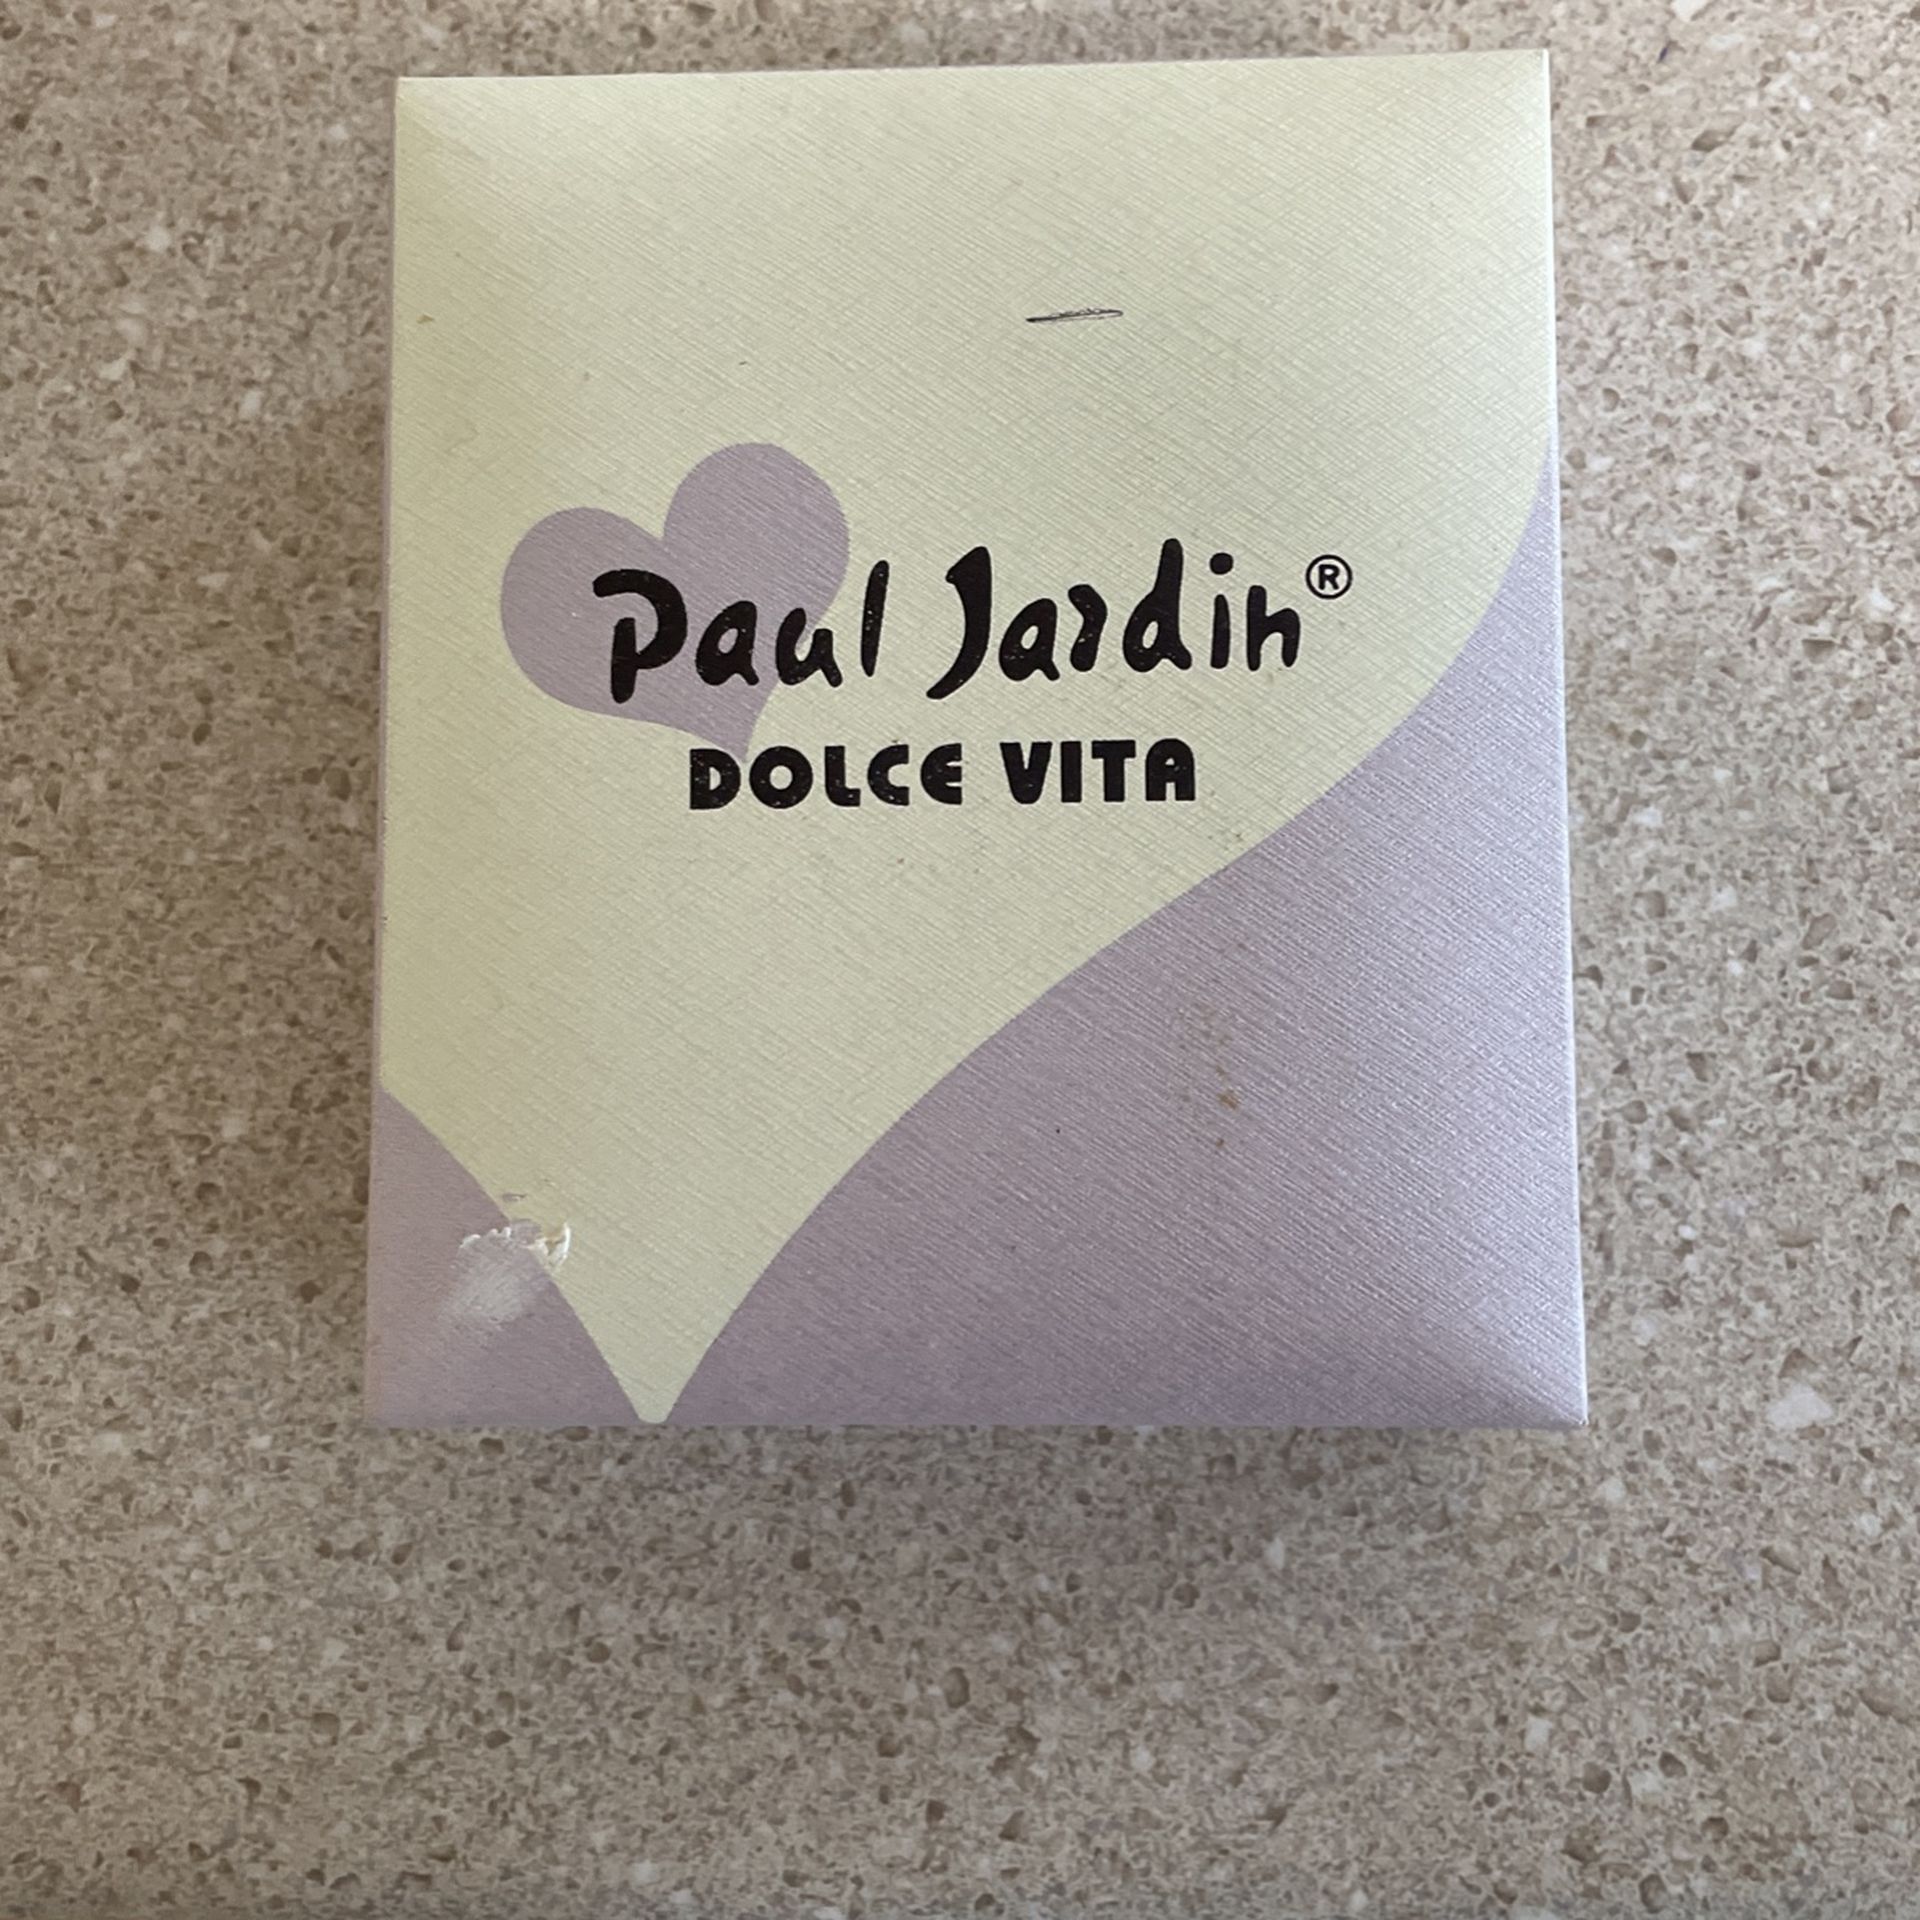 Paul Jardin Dolce vita Bracelet Set